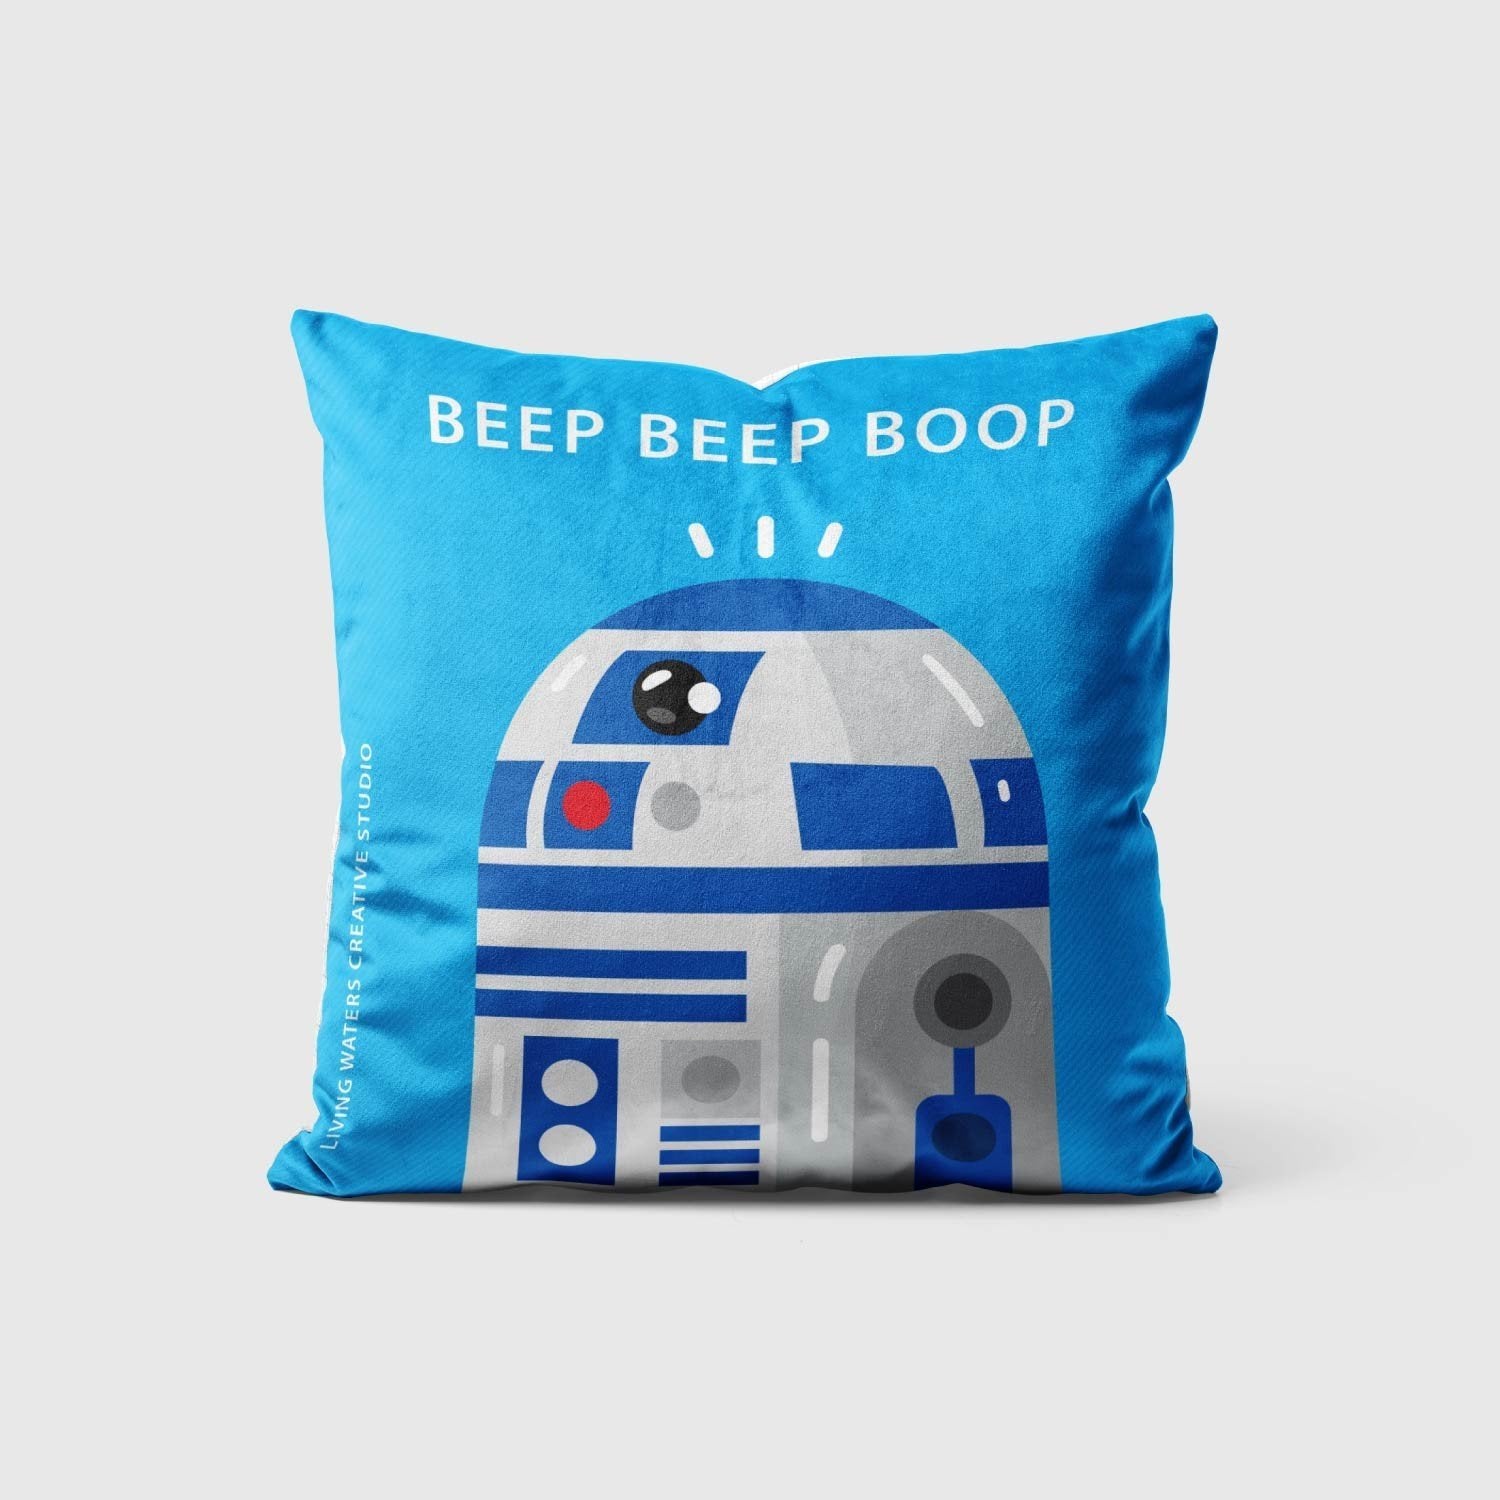 The Beep Beep Boop Cushion Cover